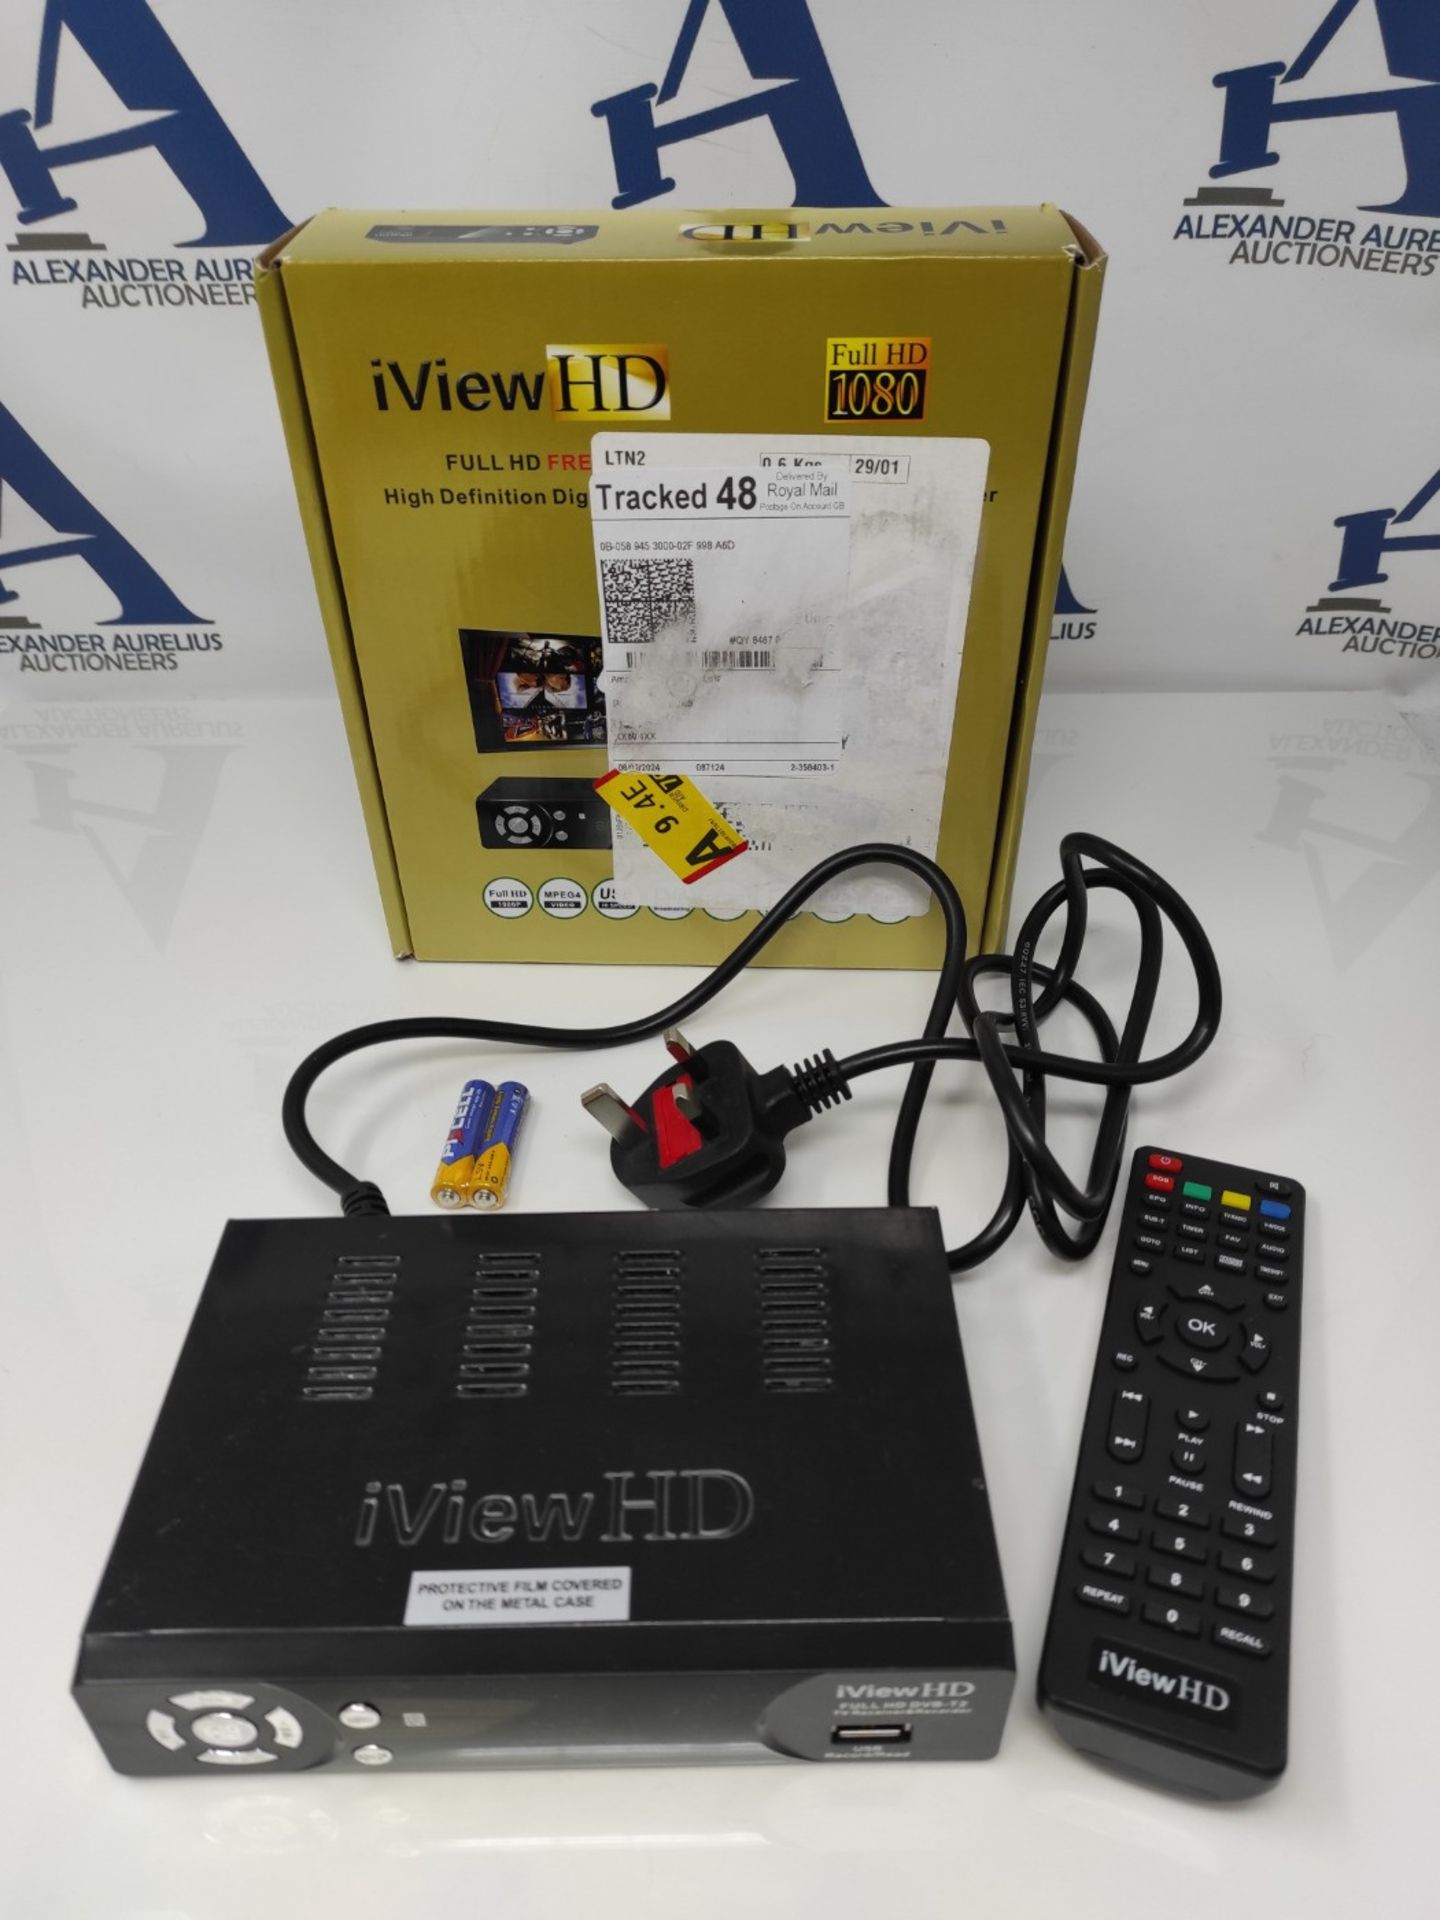 NEW FULL HD 1080P Freeview HD Receiver & HD USB Recorder DIGITAL TV Set Top Box Tuner